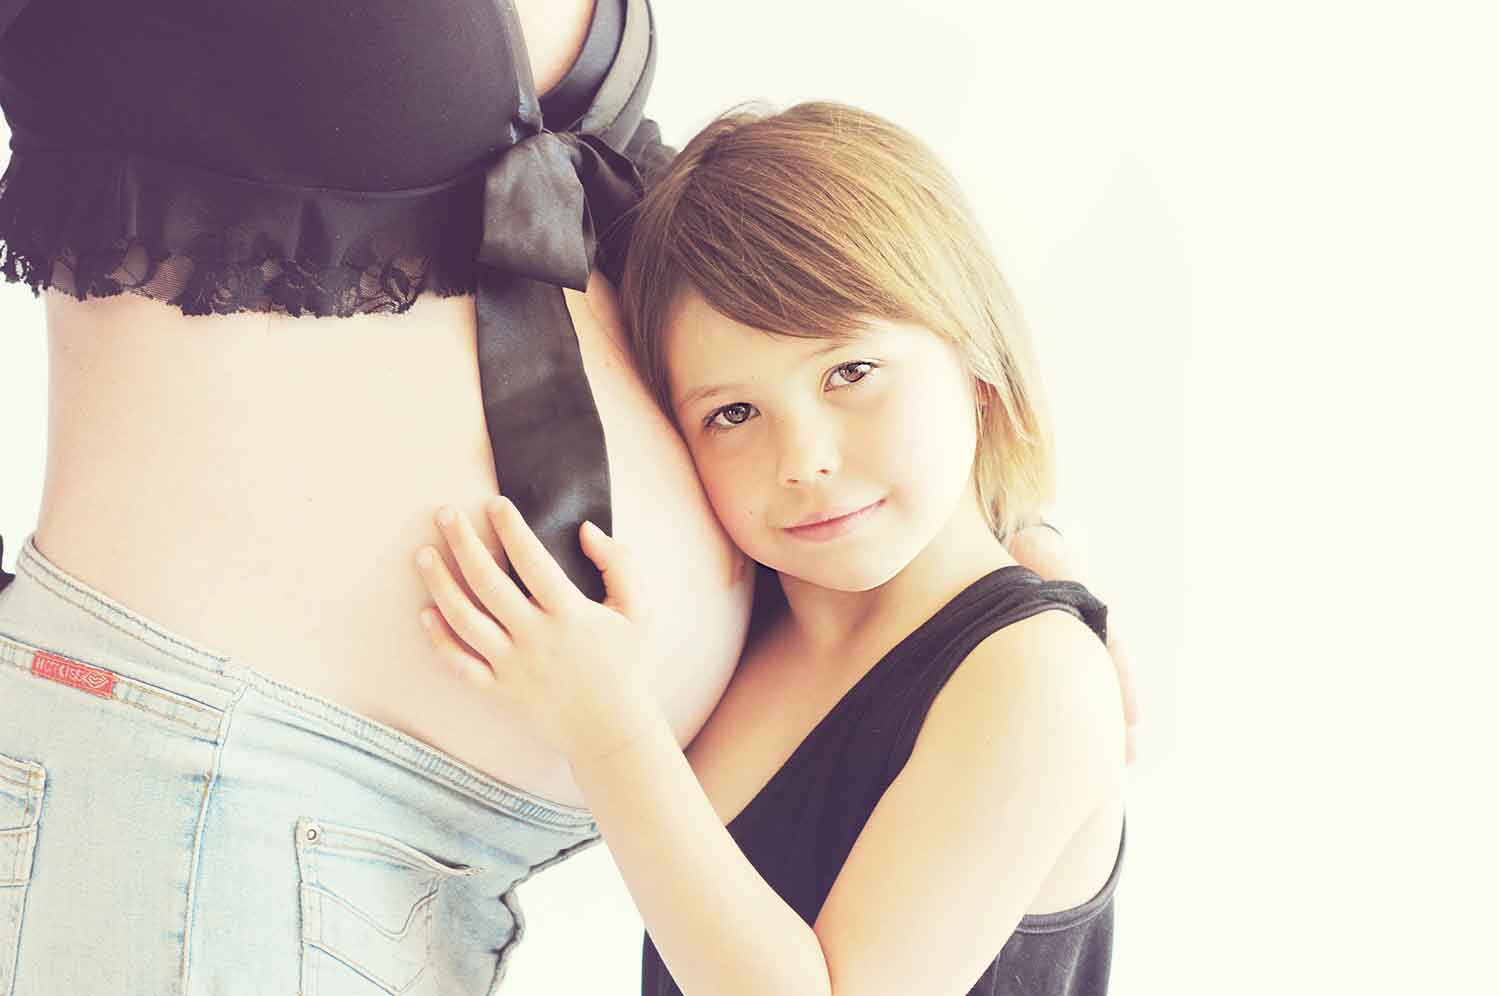 Pregnant woman daughter hug infertility help